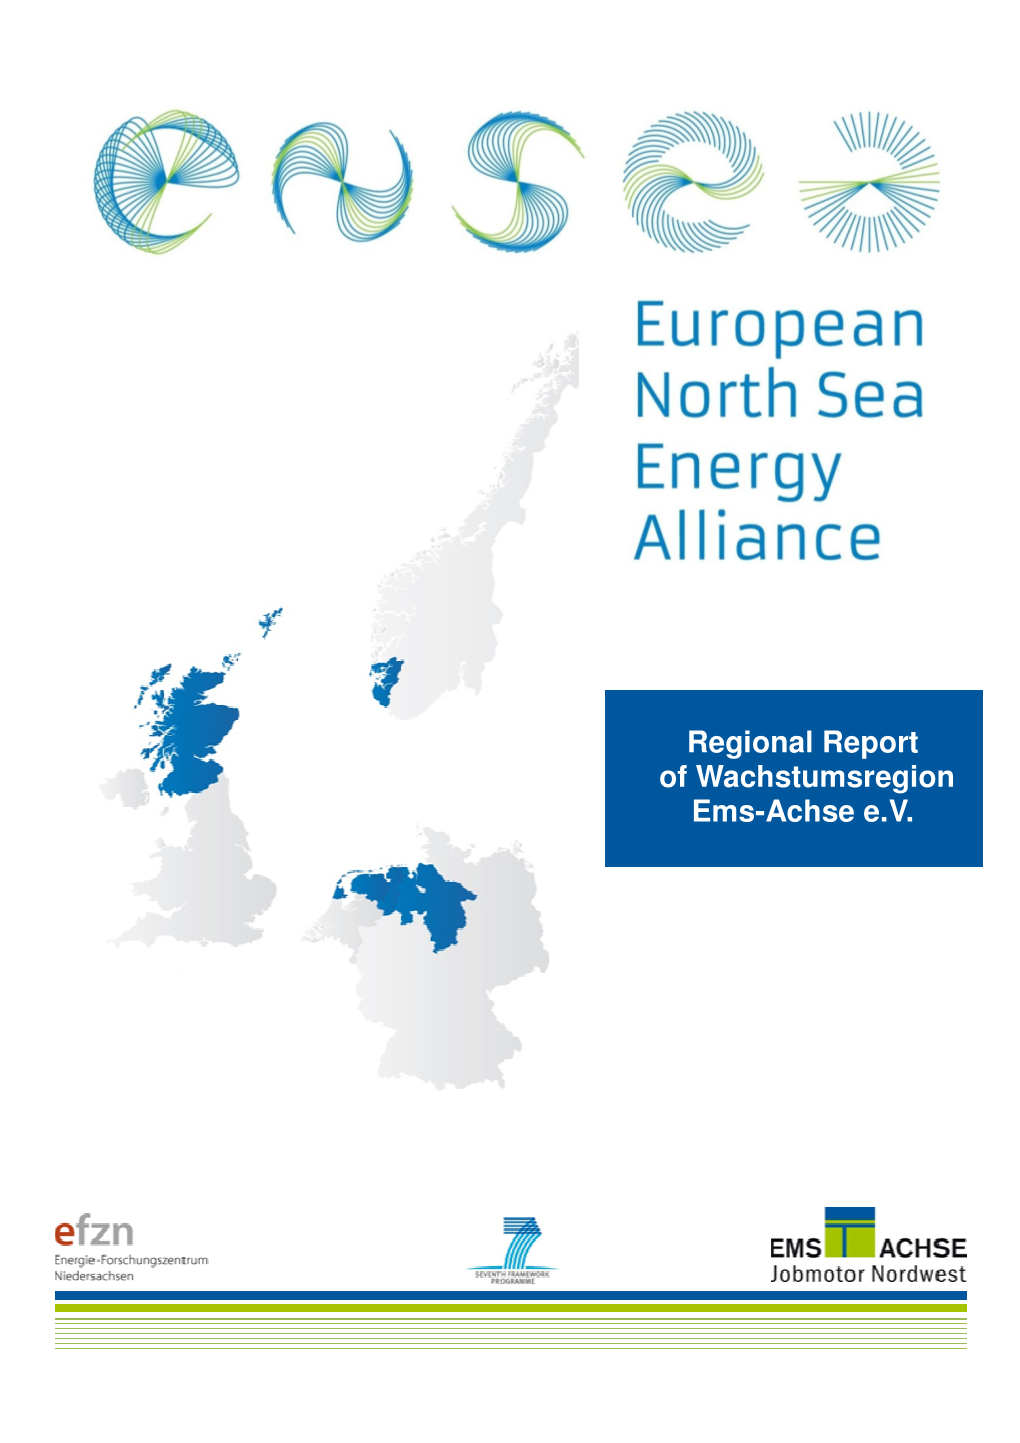 Regional Report of Wachstumsregion Ems-Achse E.V